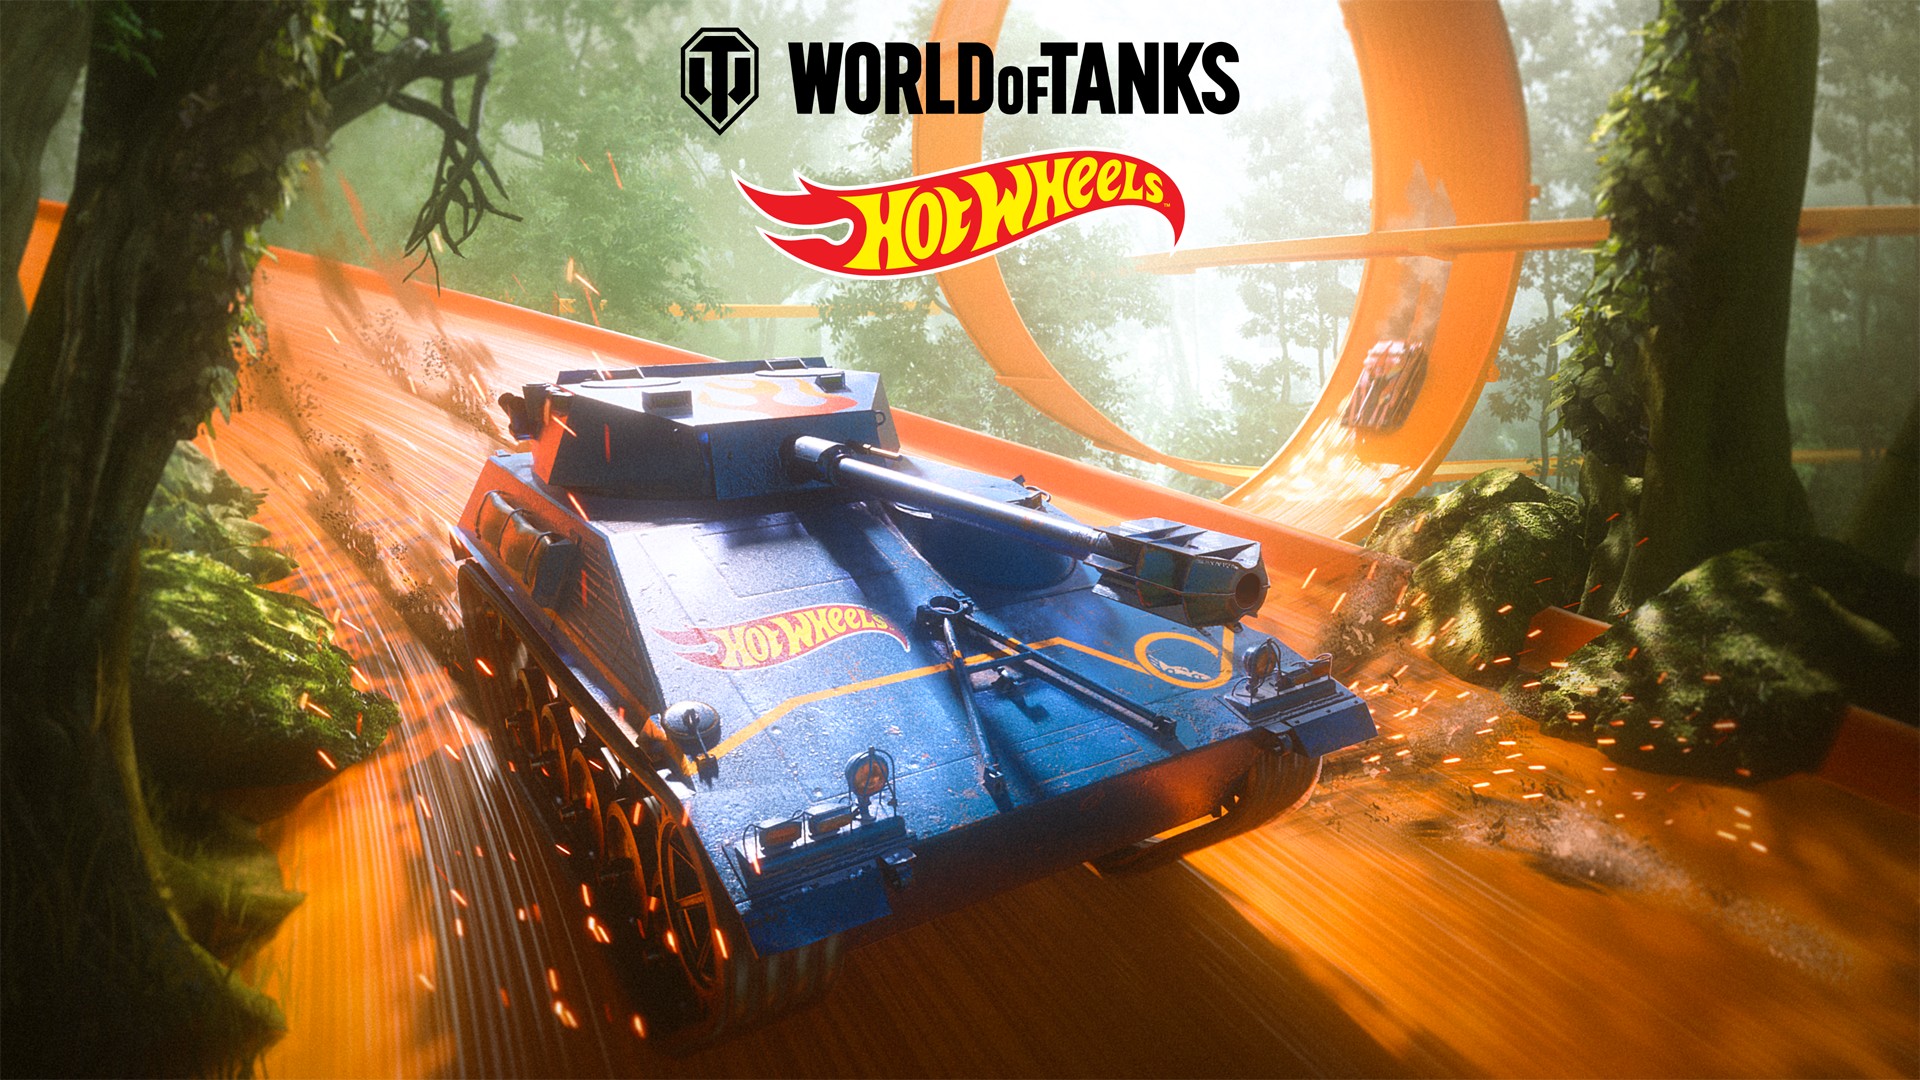 World of Tanks: Hot Wheels